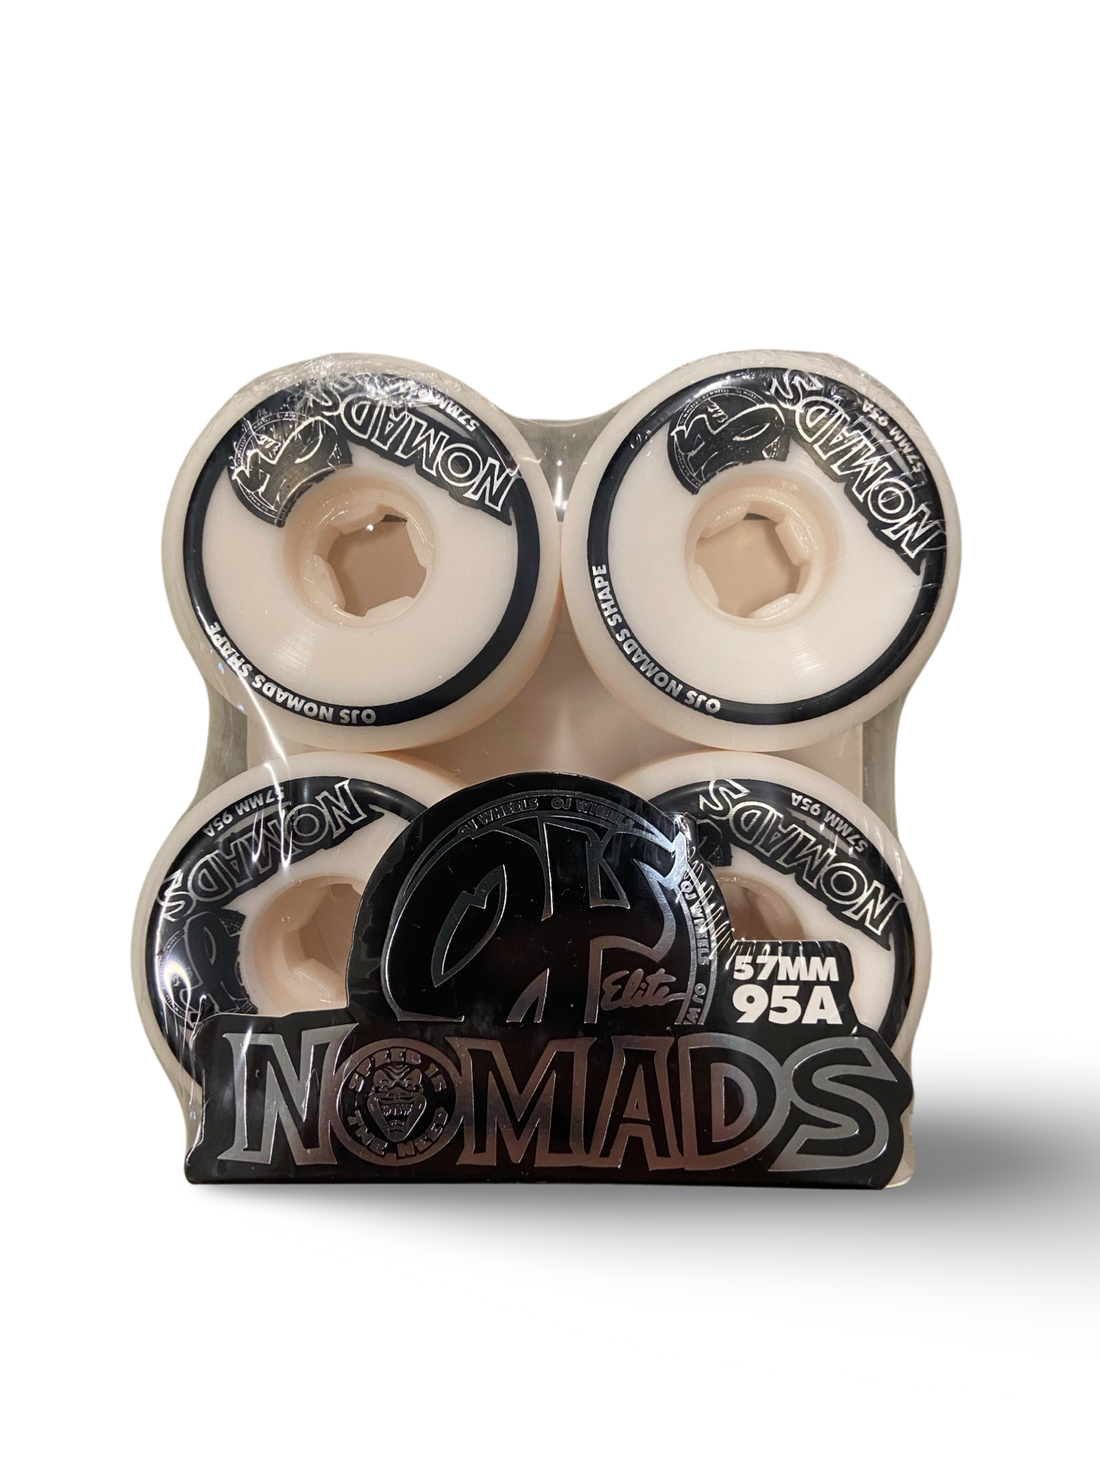 Oj Wheels Nomads Elite 57mm 95a